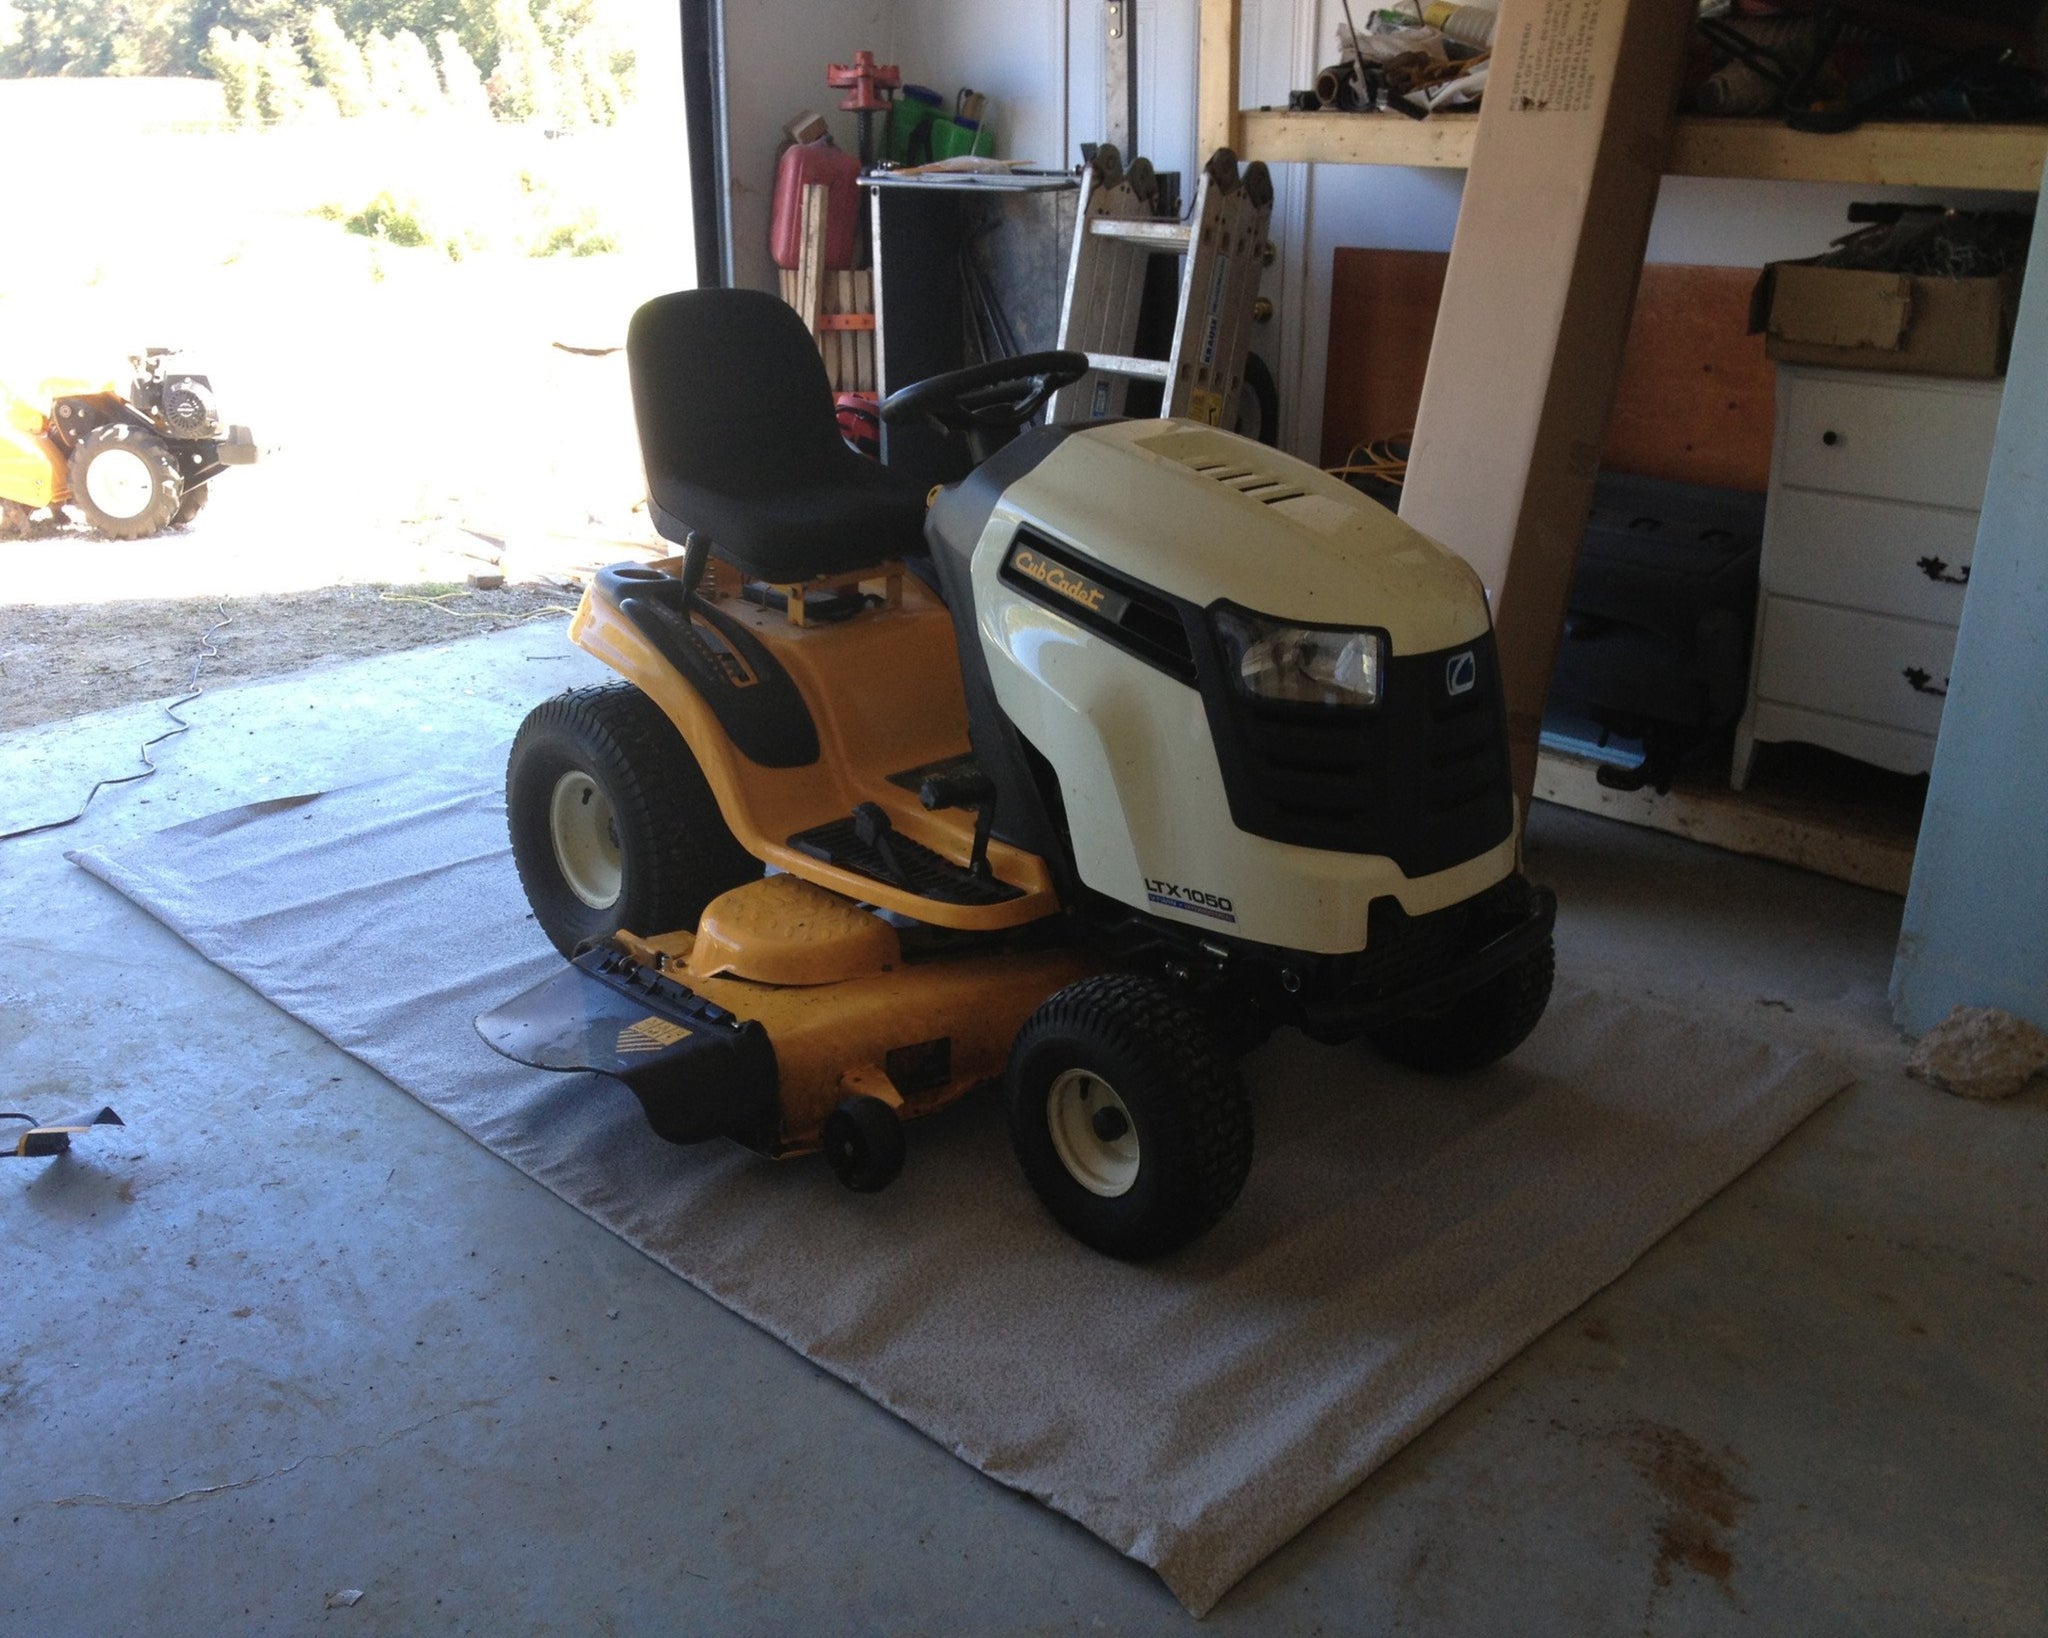 ATV & Riding Lawnmower Mat